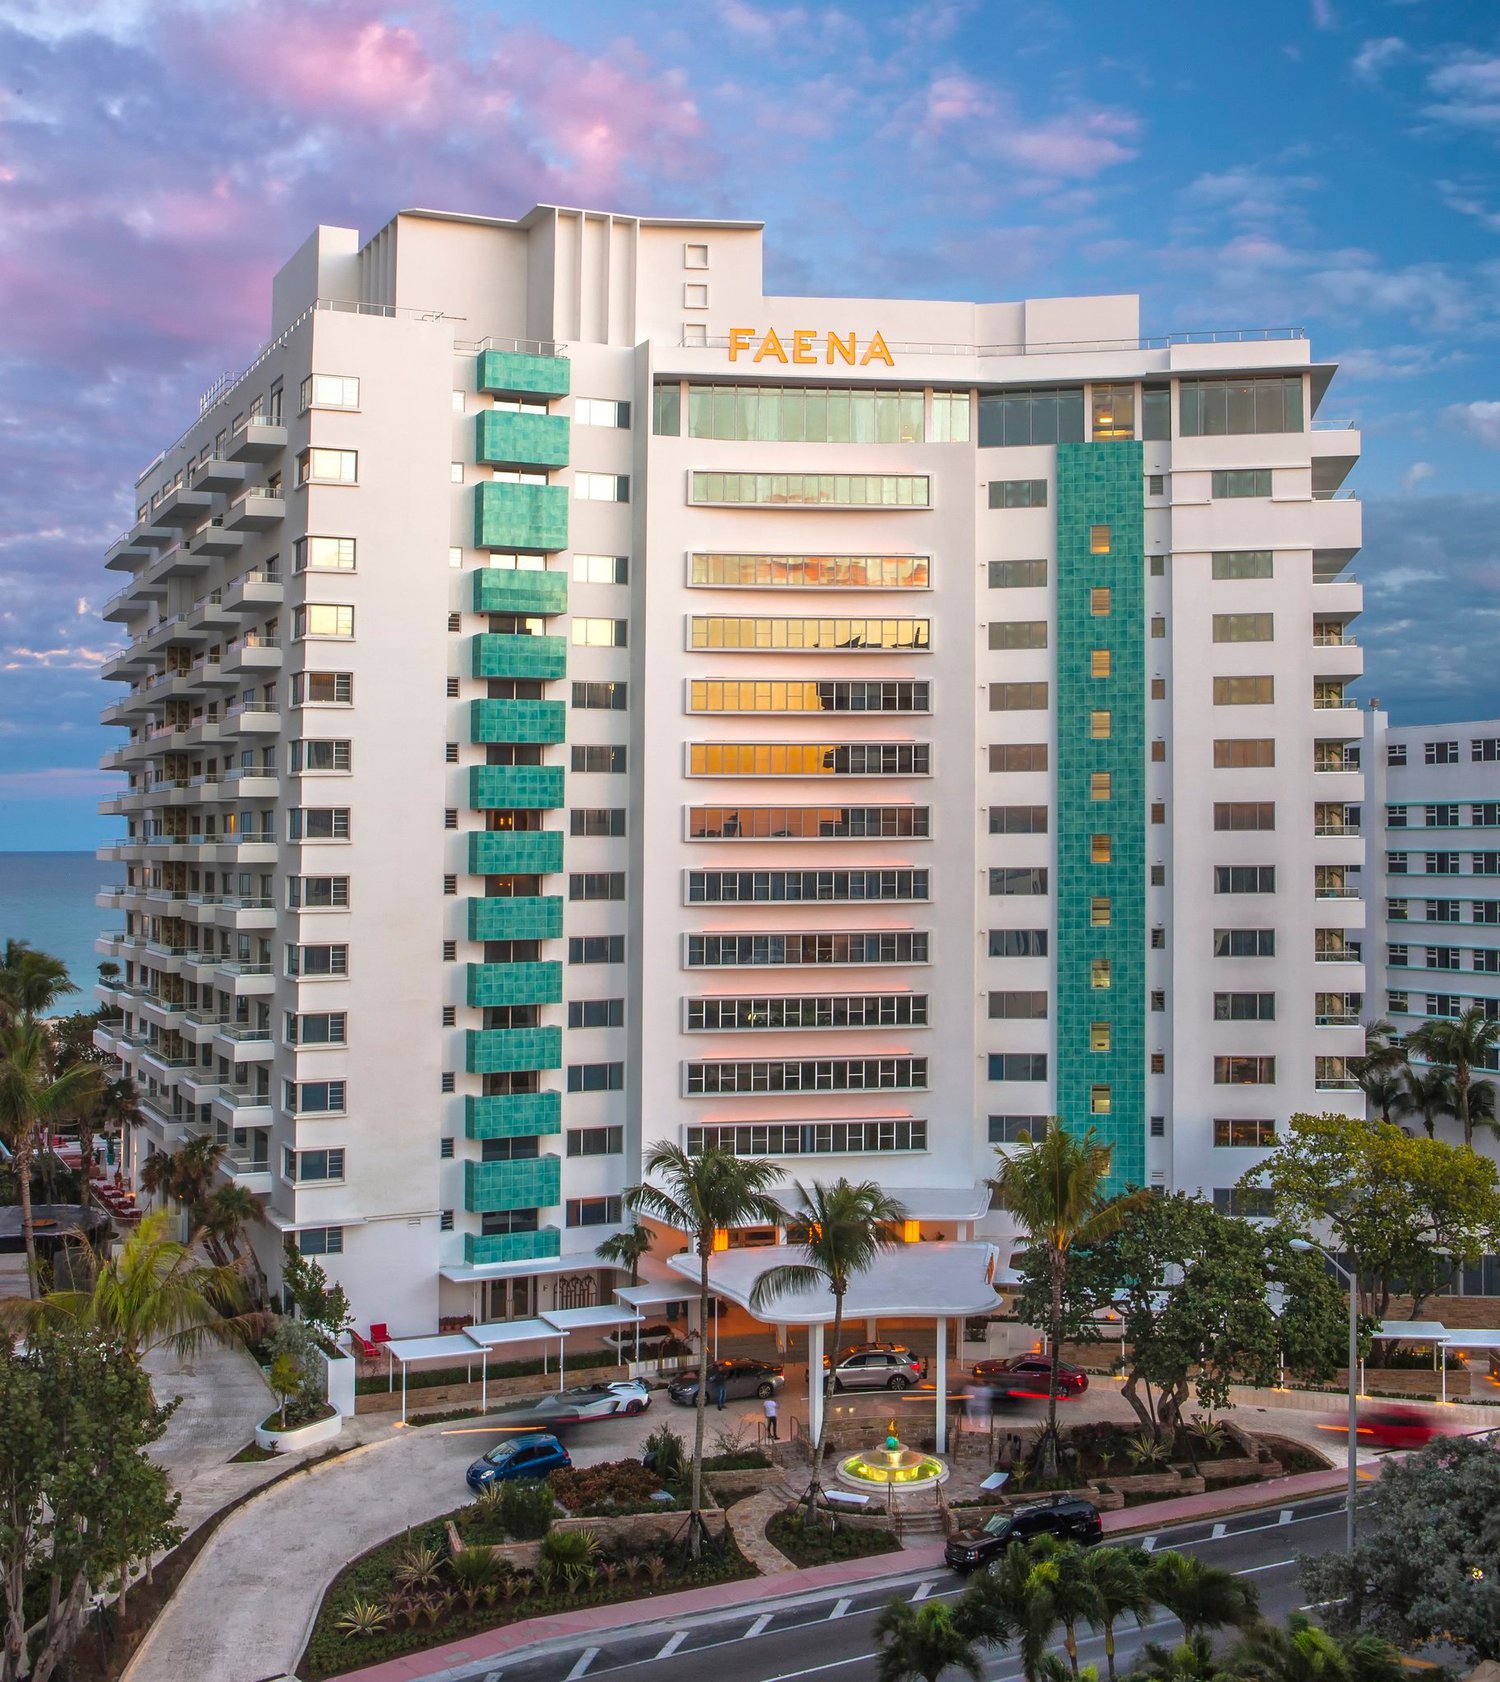 Faena Hotel Miami Beach  Miami Beach  Jobs Hospitality Online